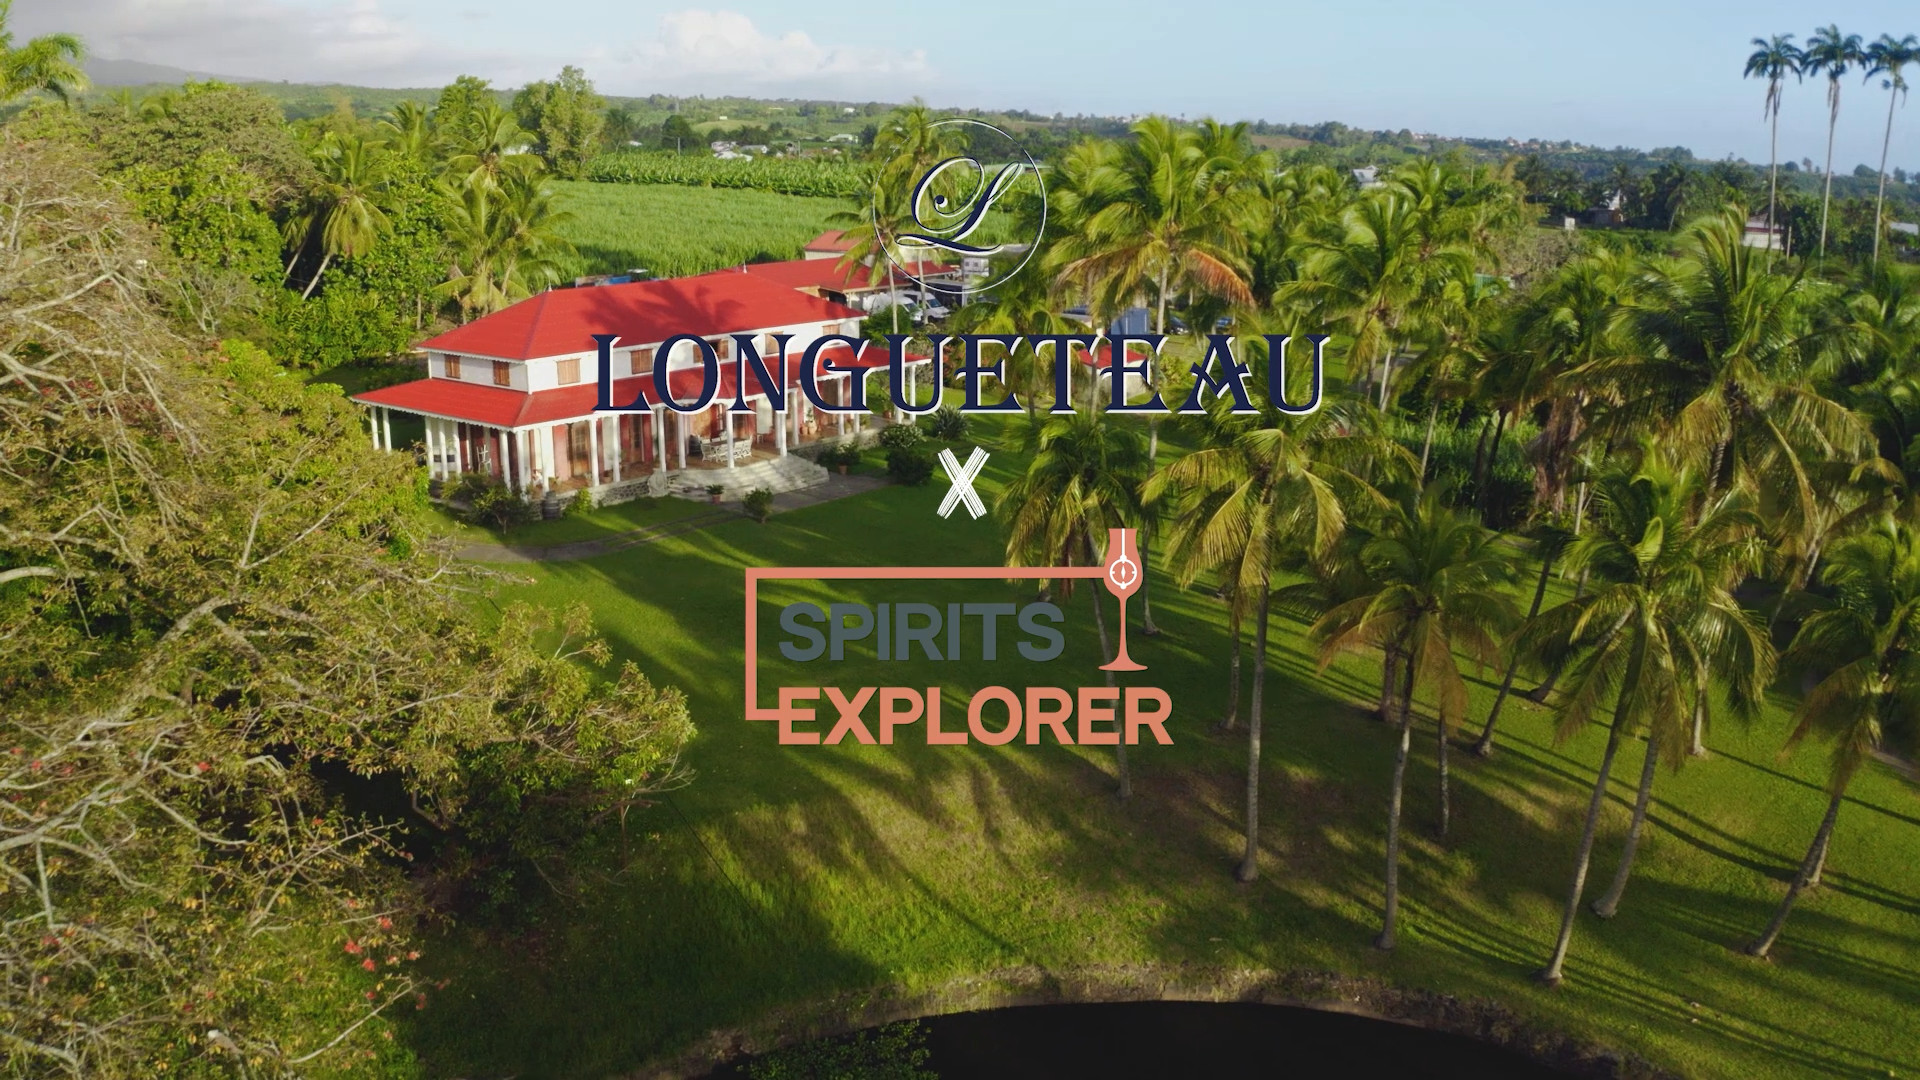 Spirits Explorer in Guadeloupe Episode 2 – Domaine Longueteau